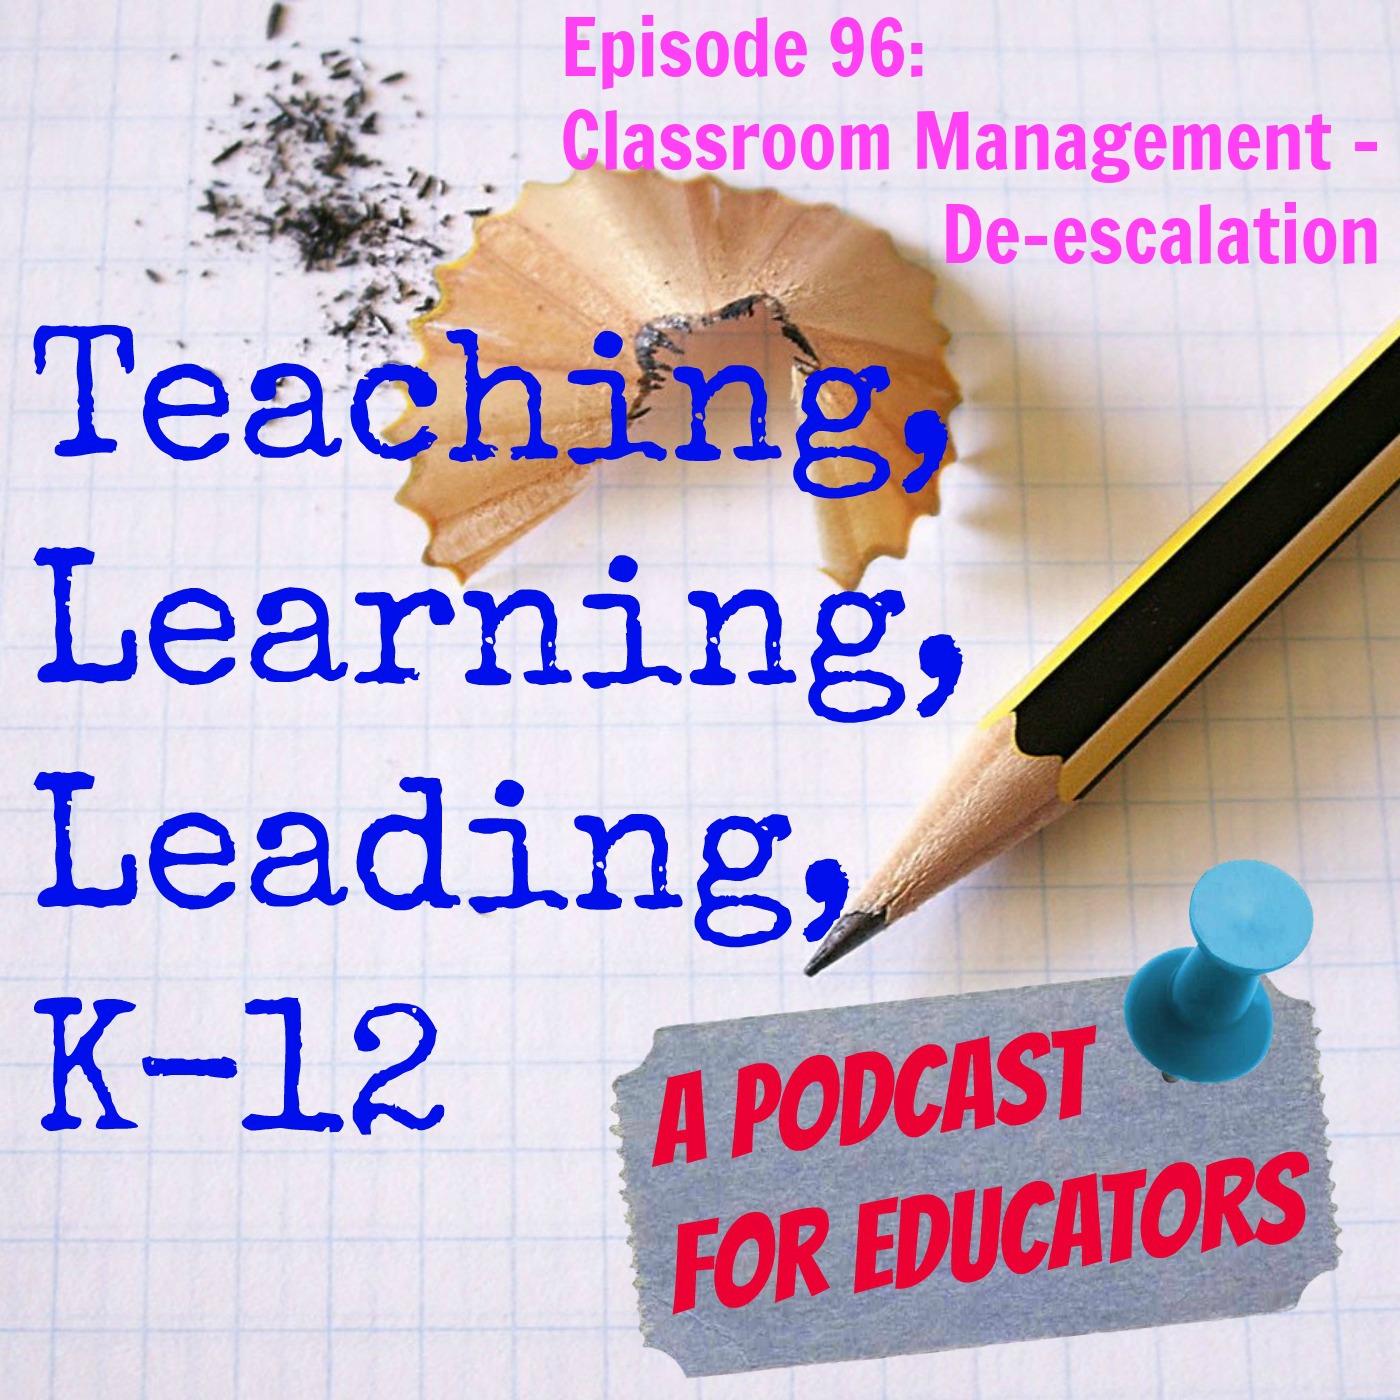 Episode 96: Classroom Management - De-escalation